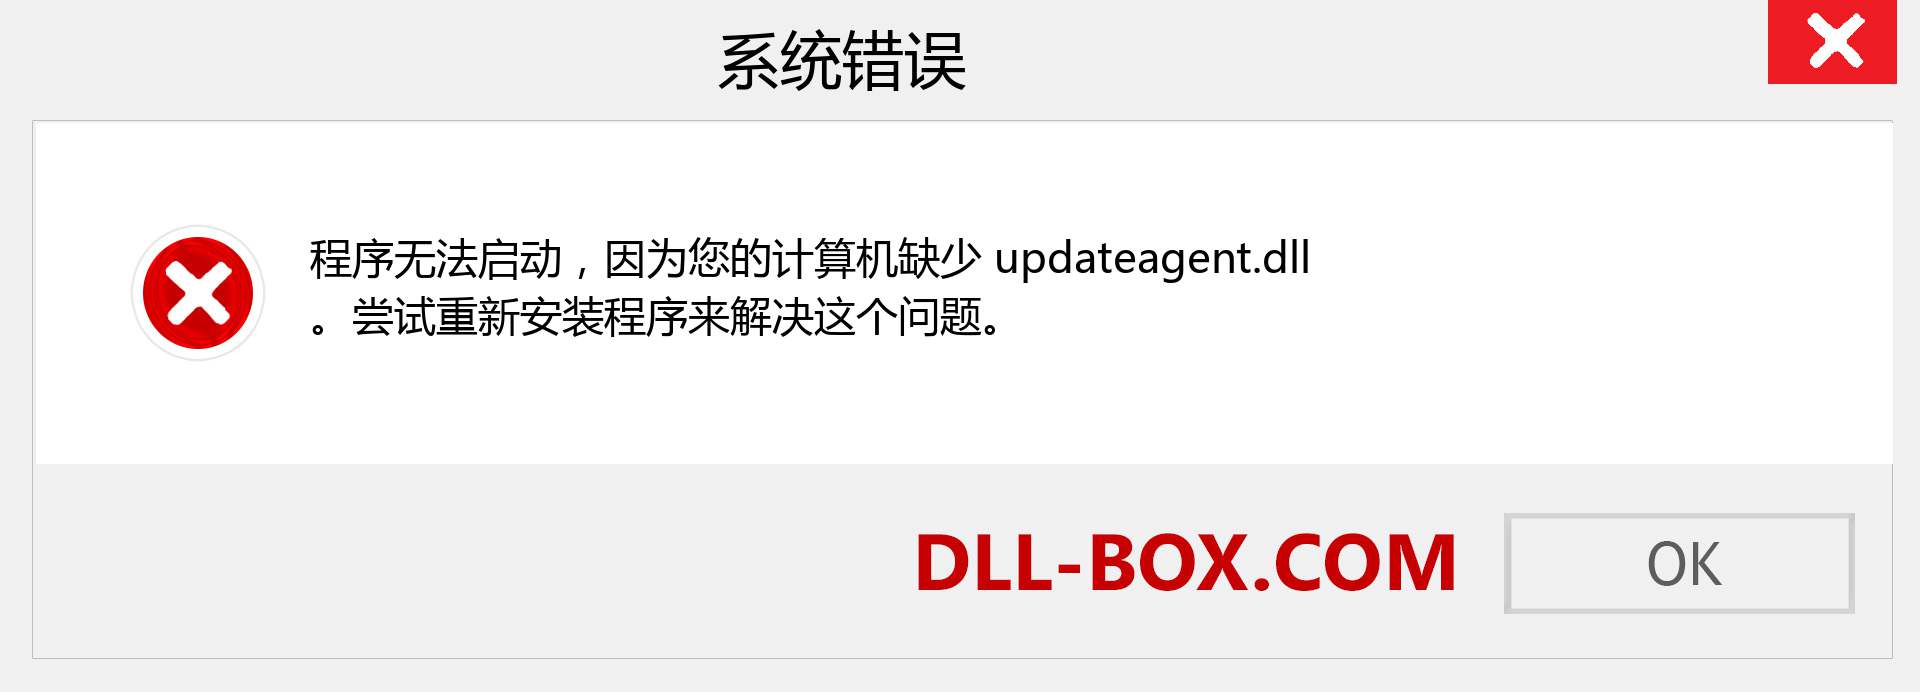 updateagent.dll 文件丢失？。 适用于 Windows 7、8、10 的下载 - 修复 Windows、照片、图像上的 updateagent dll 丢失错误